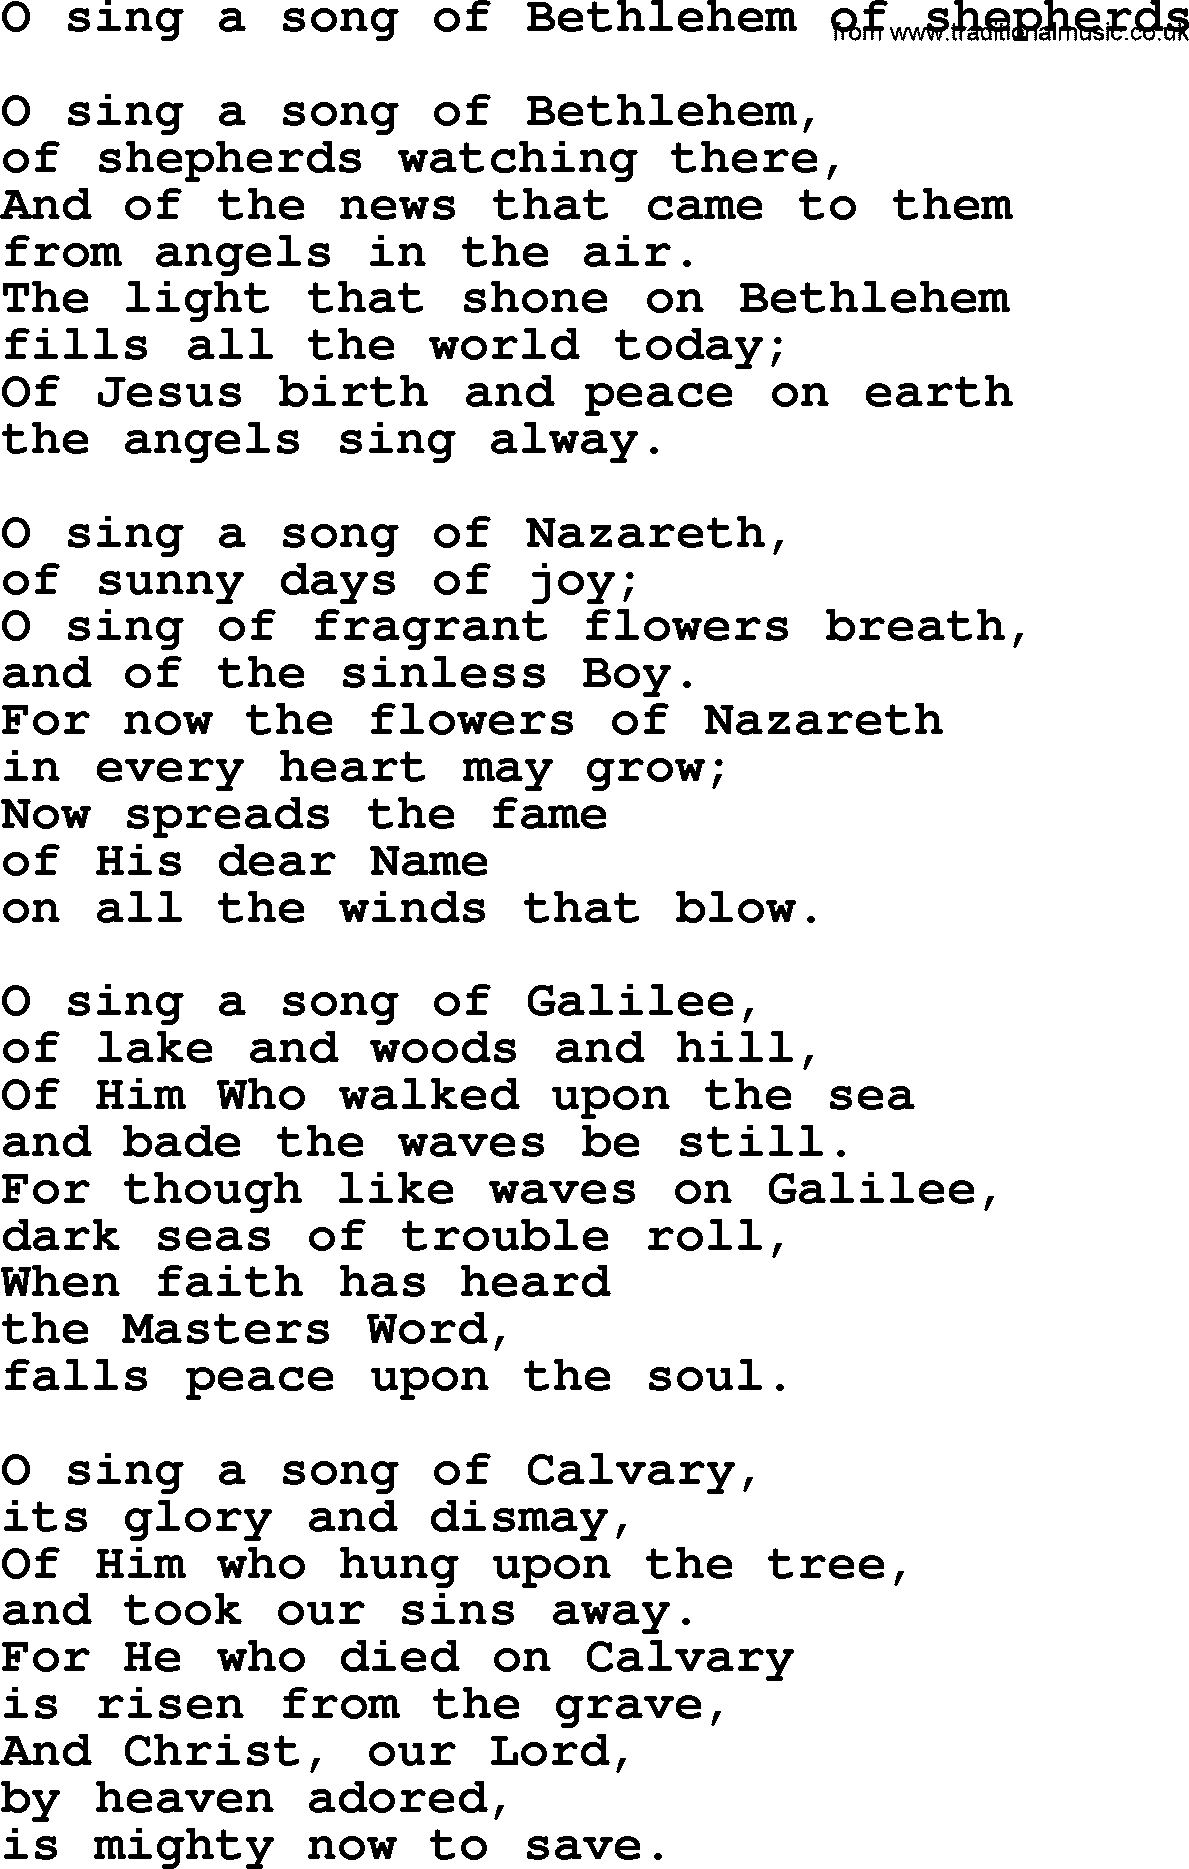 Presbyterian Hymns collection, Hymn: O Sing A Song Of Bethlehem Of Shepherds, lyrics and PDF